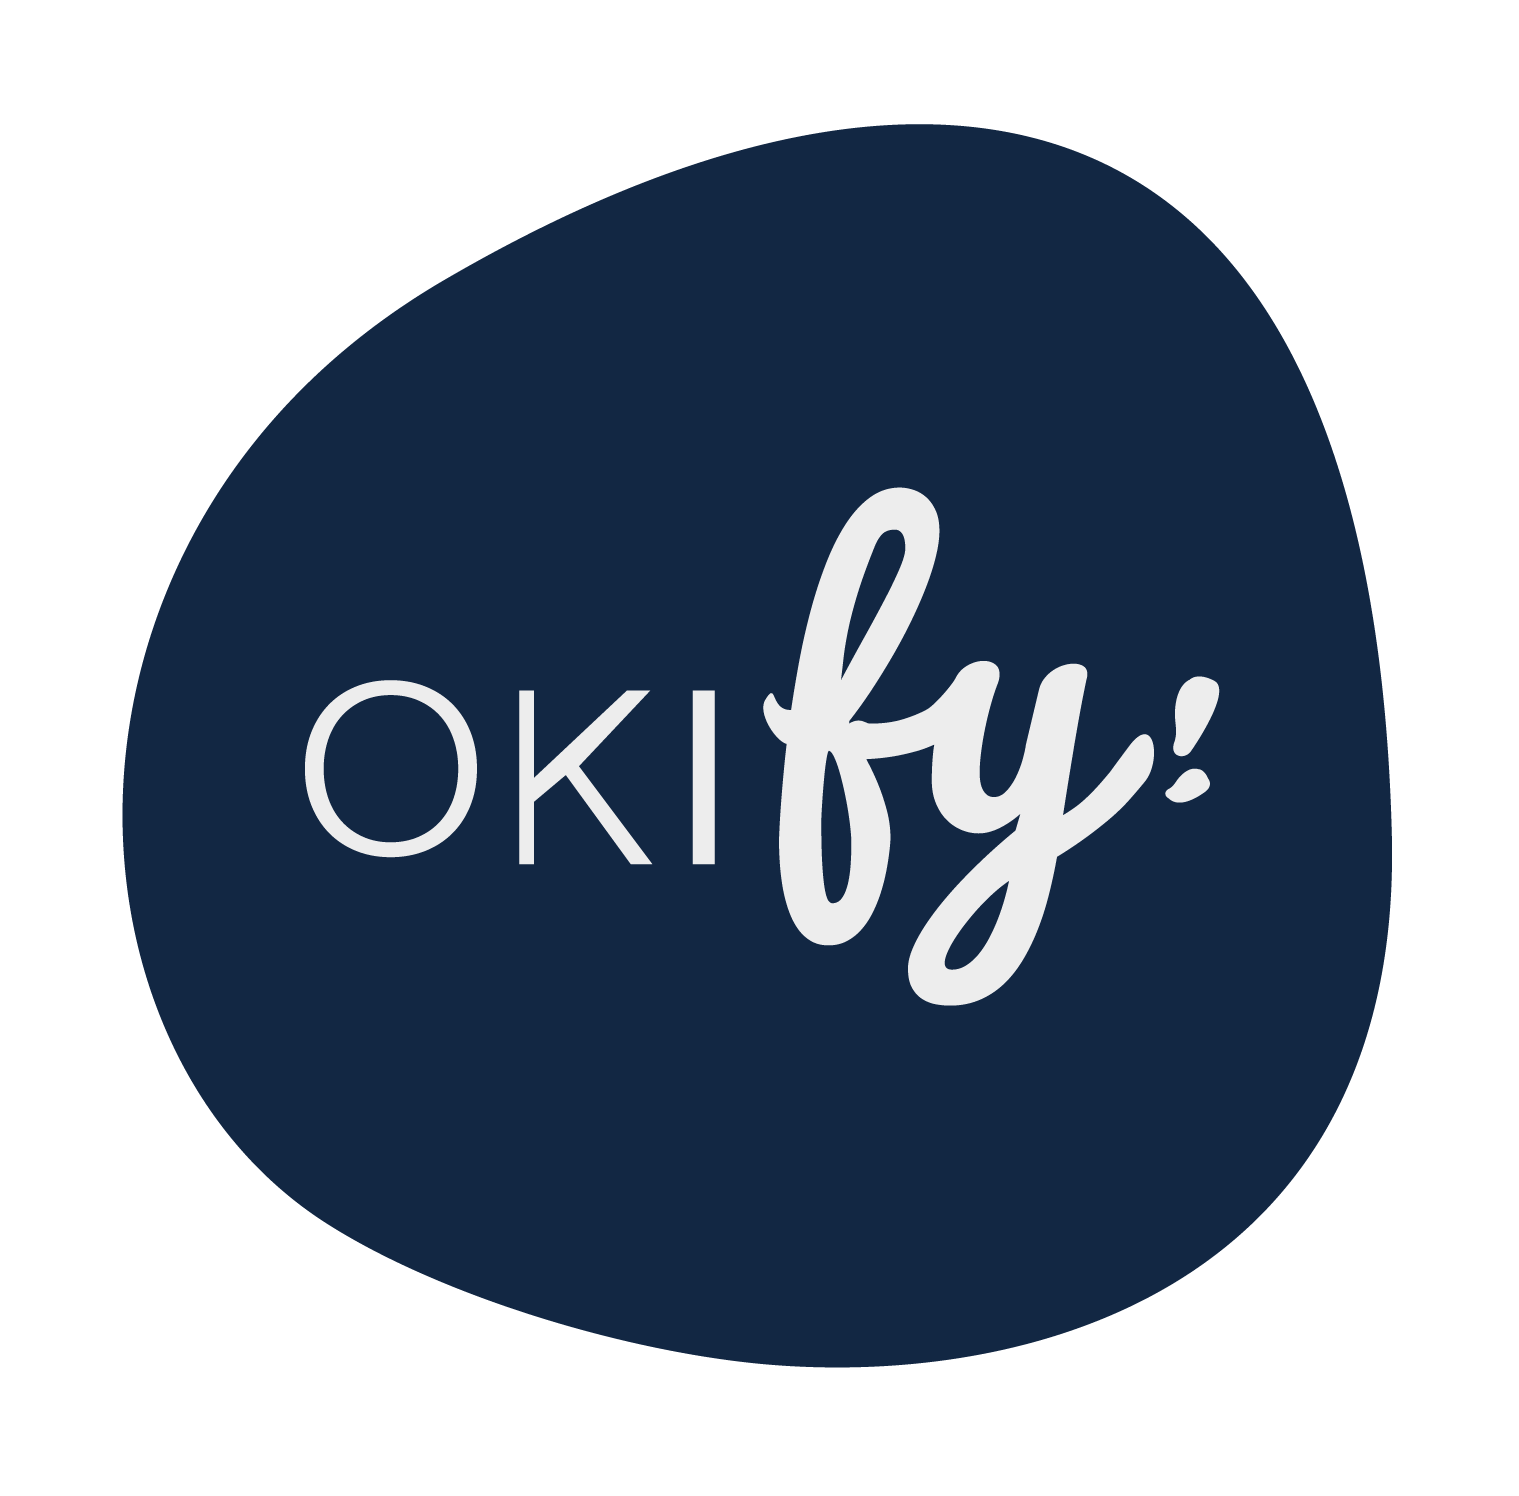 Okify